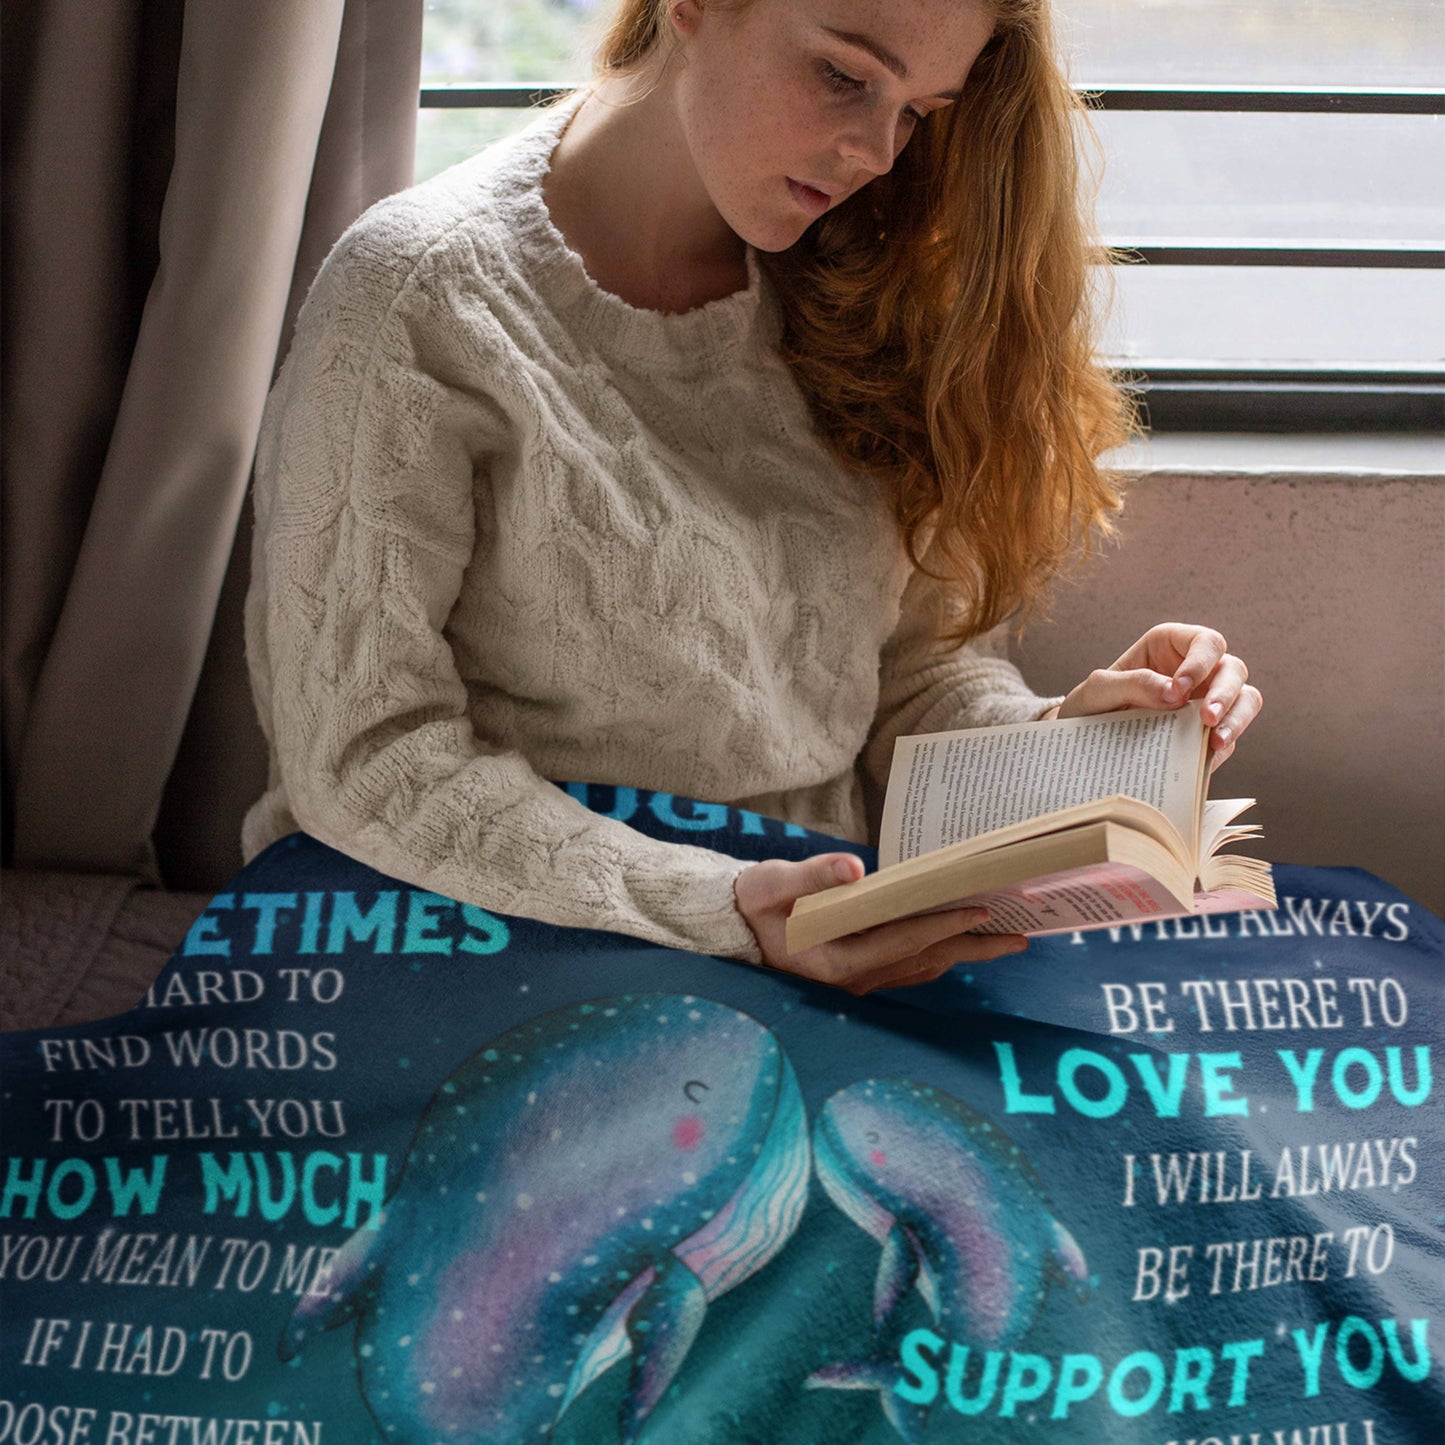 Whale Ocean Themed Daughter Blanket